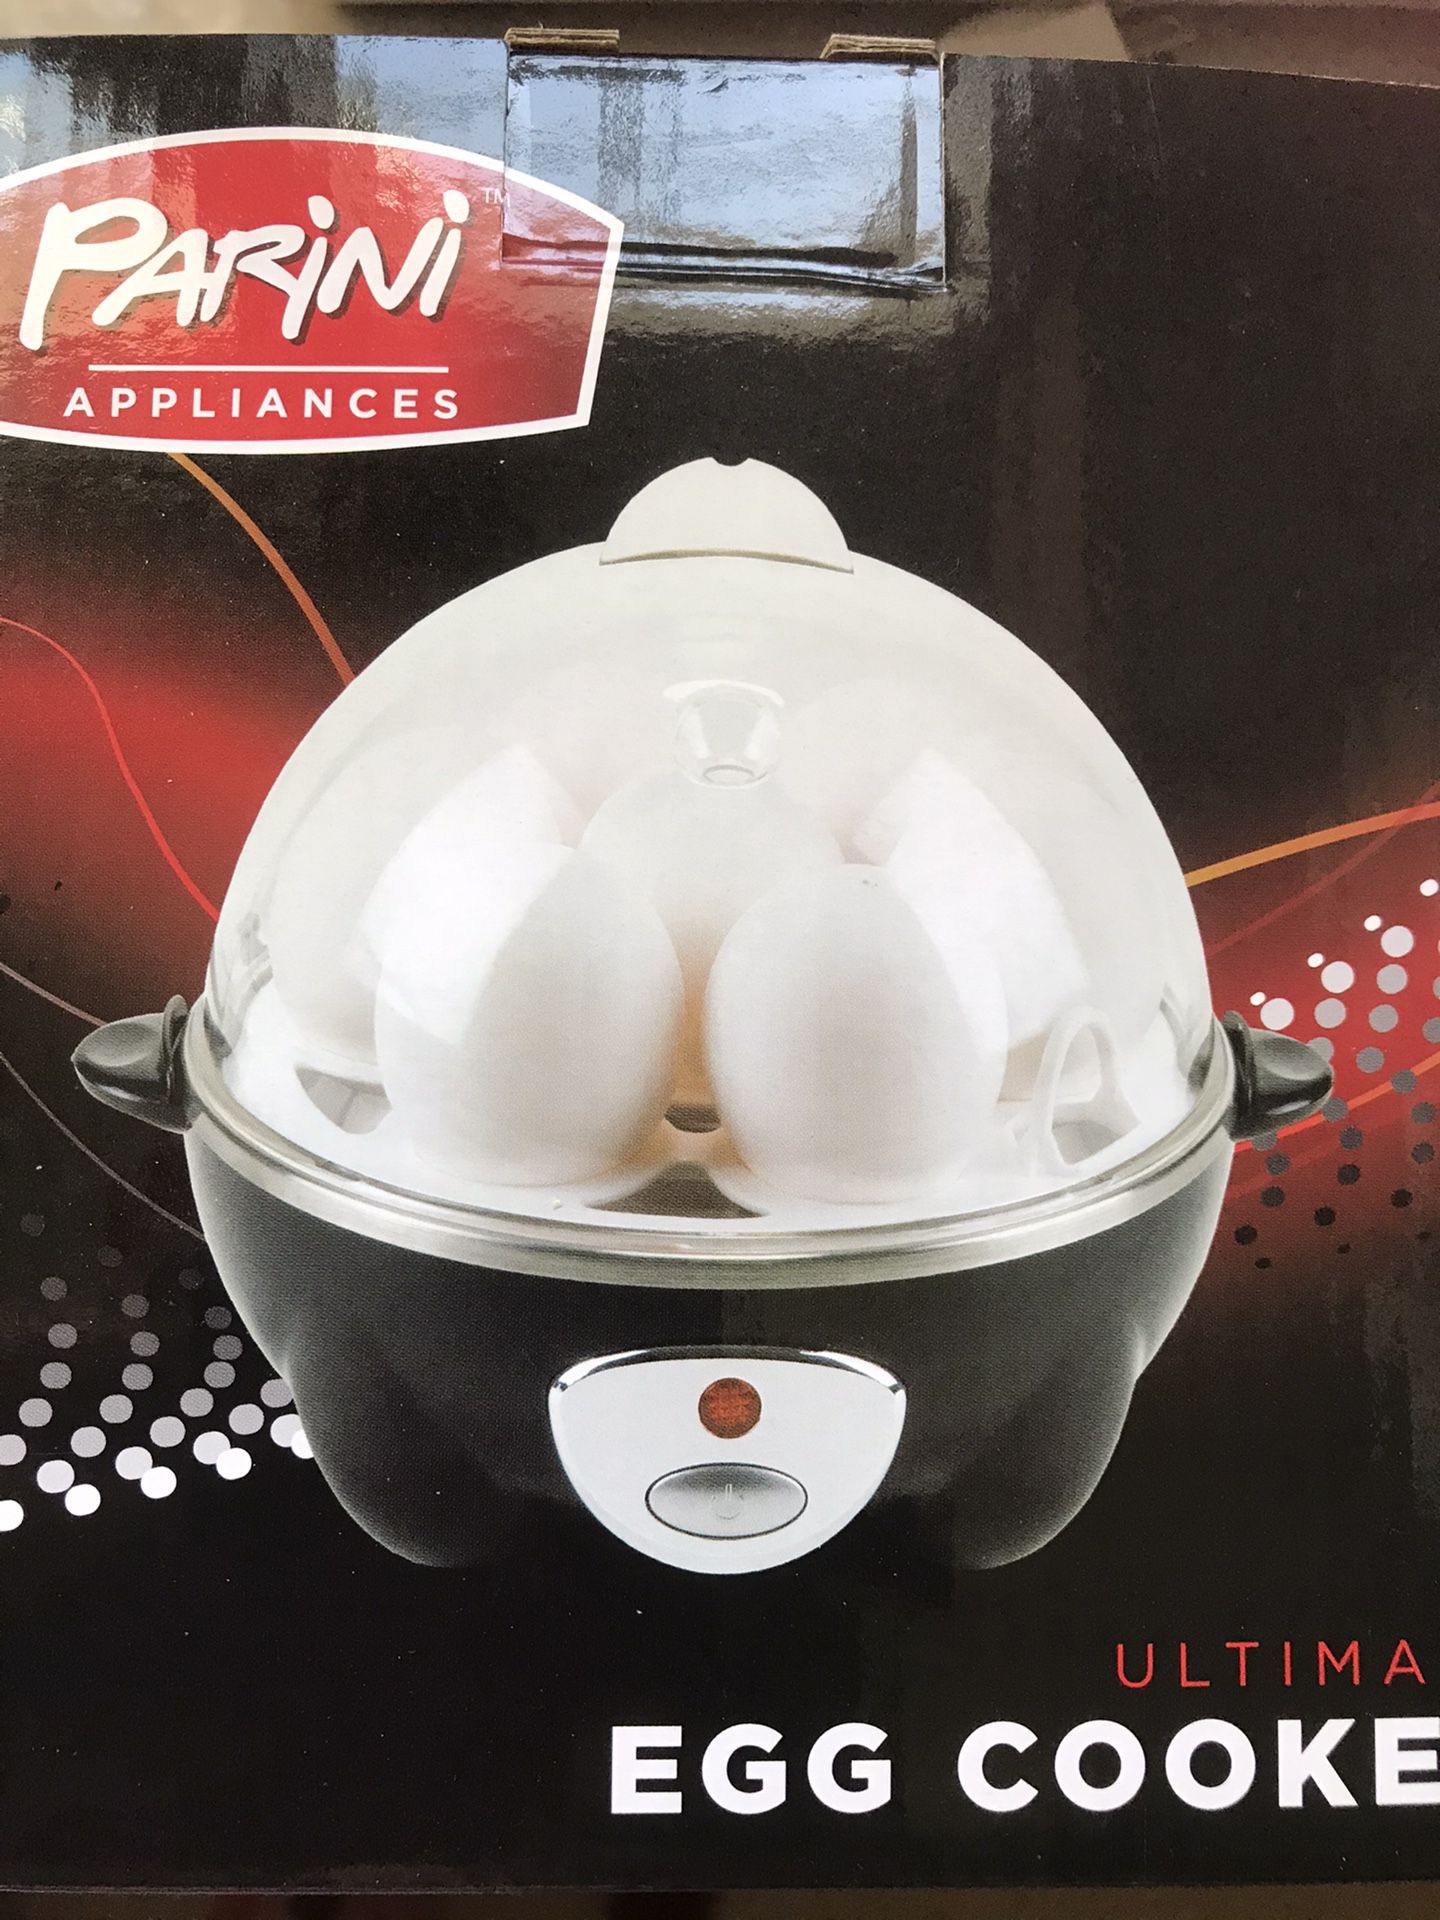 New Parini Electric egg cooker